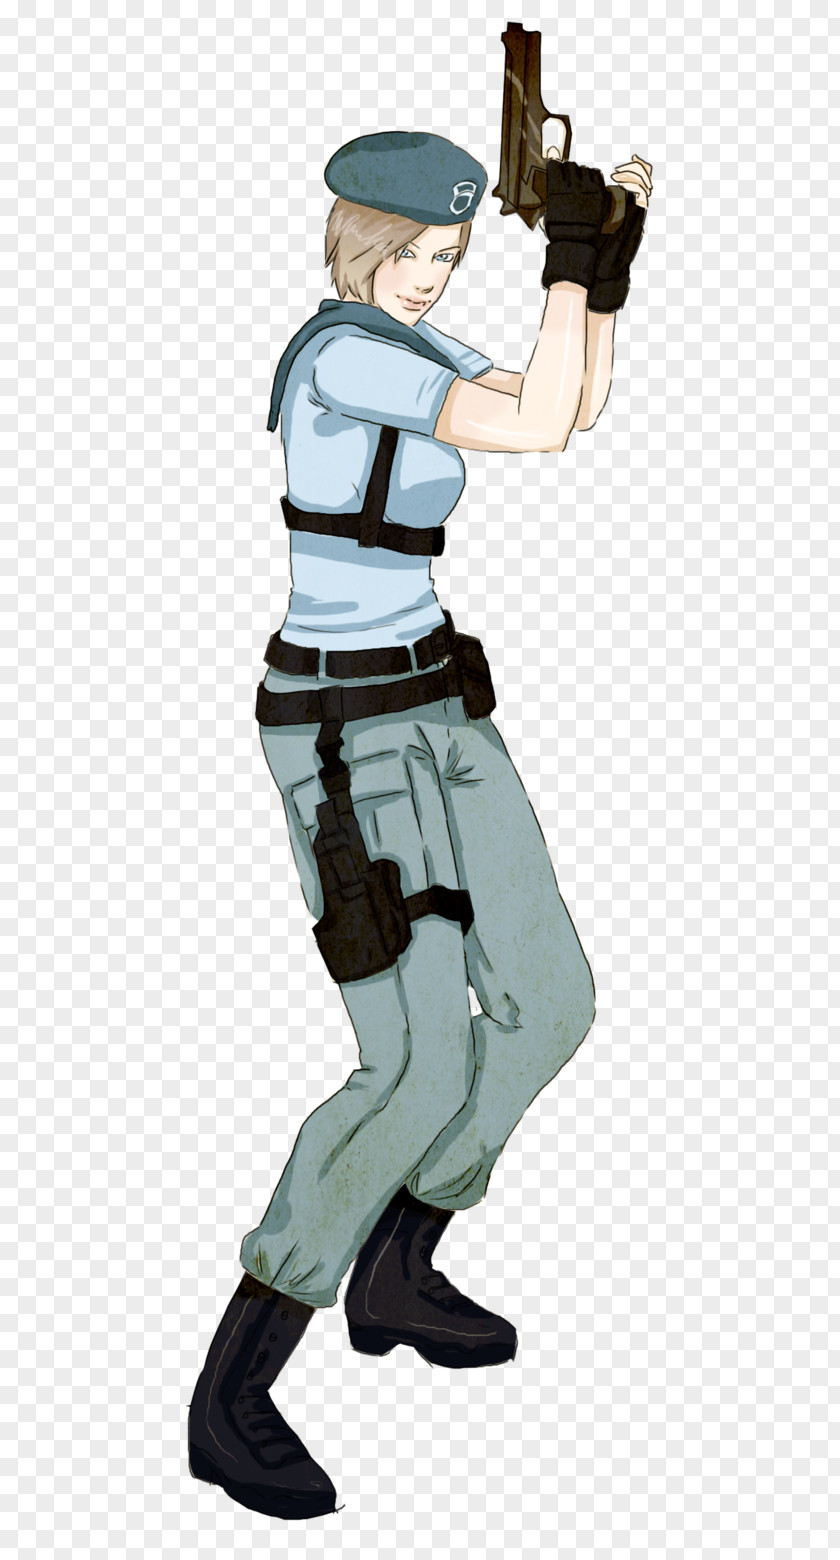 Jill Valentine Cartoon Mercenary Profession Character PNG